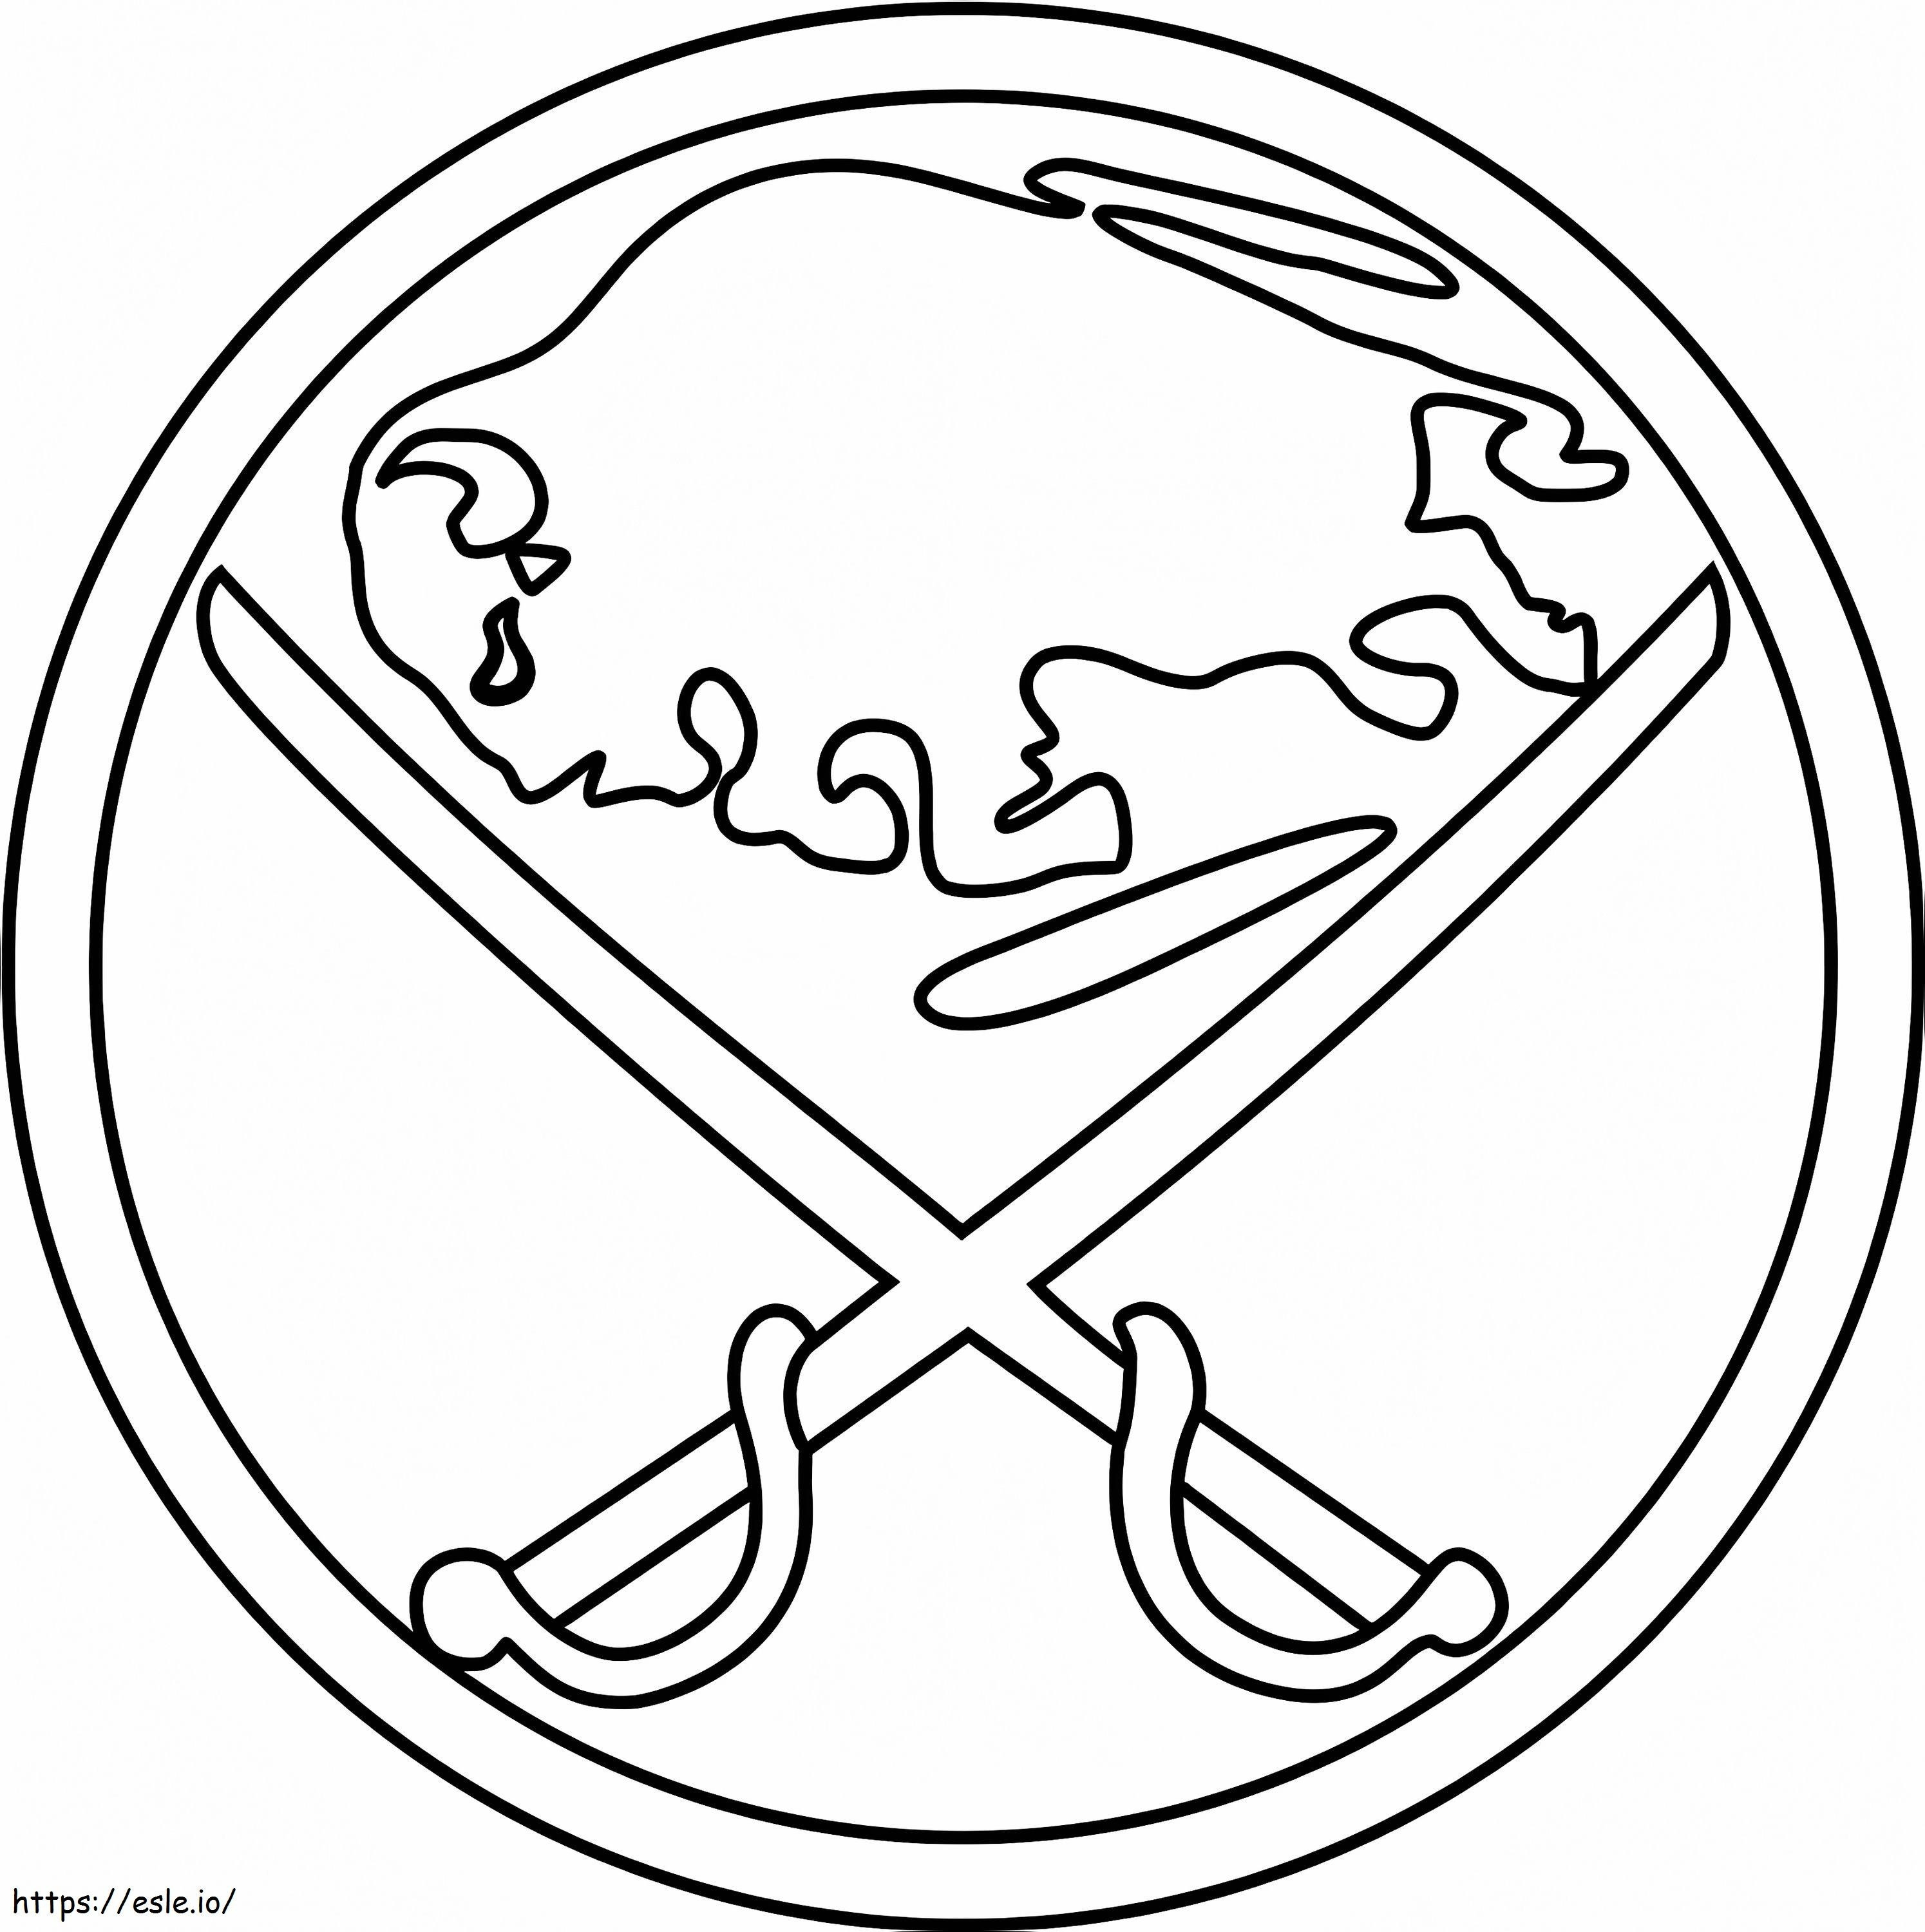 Buffalo Sabres-logo kleurplaat kleurplaat